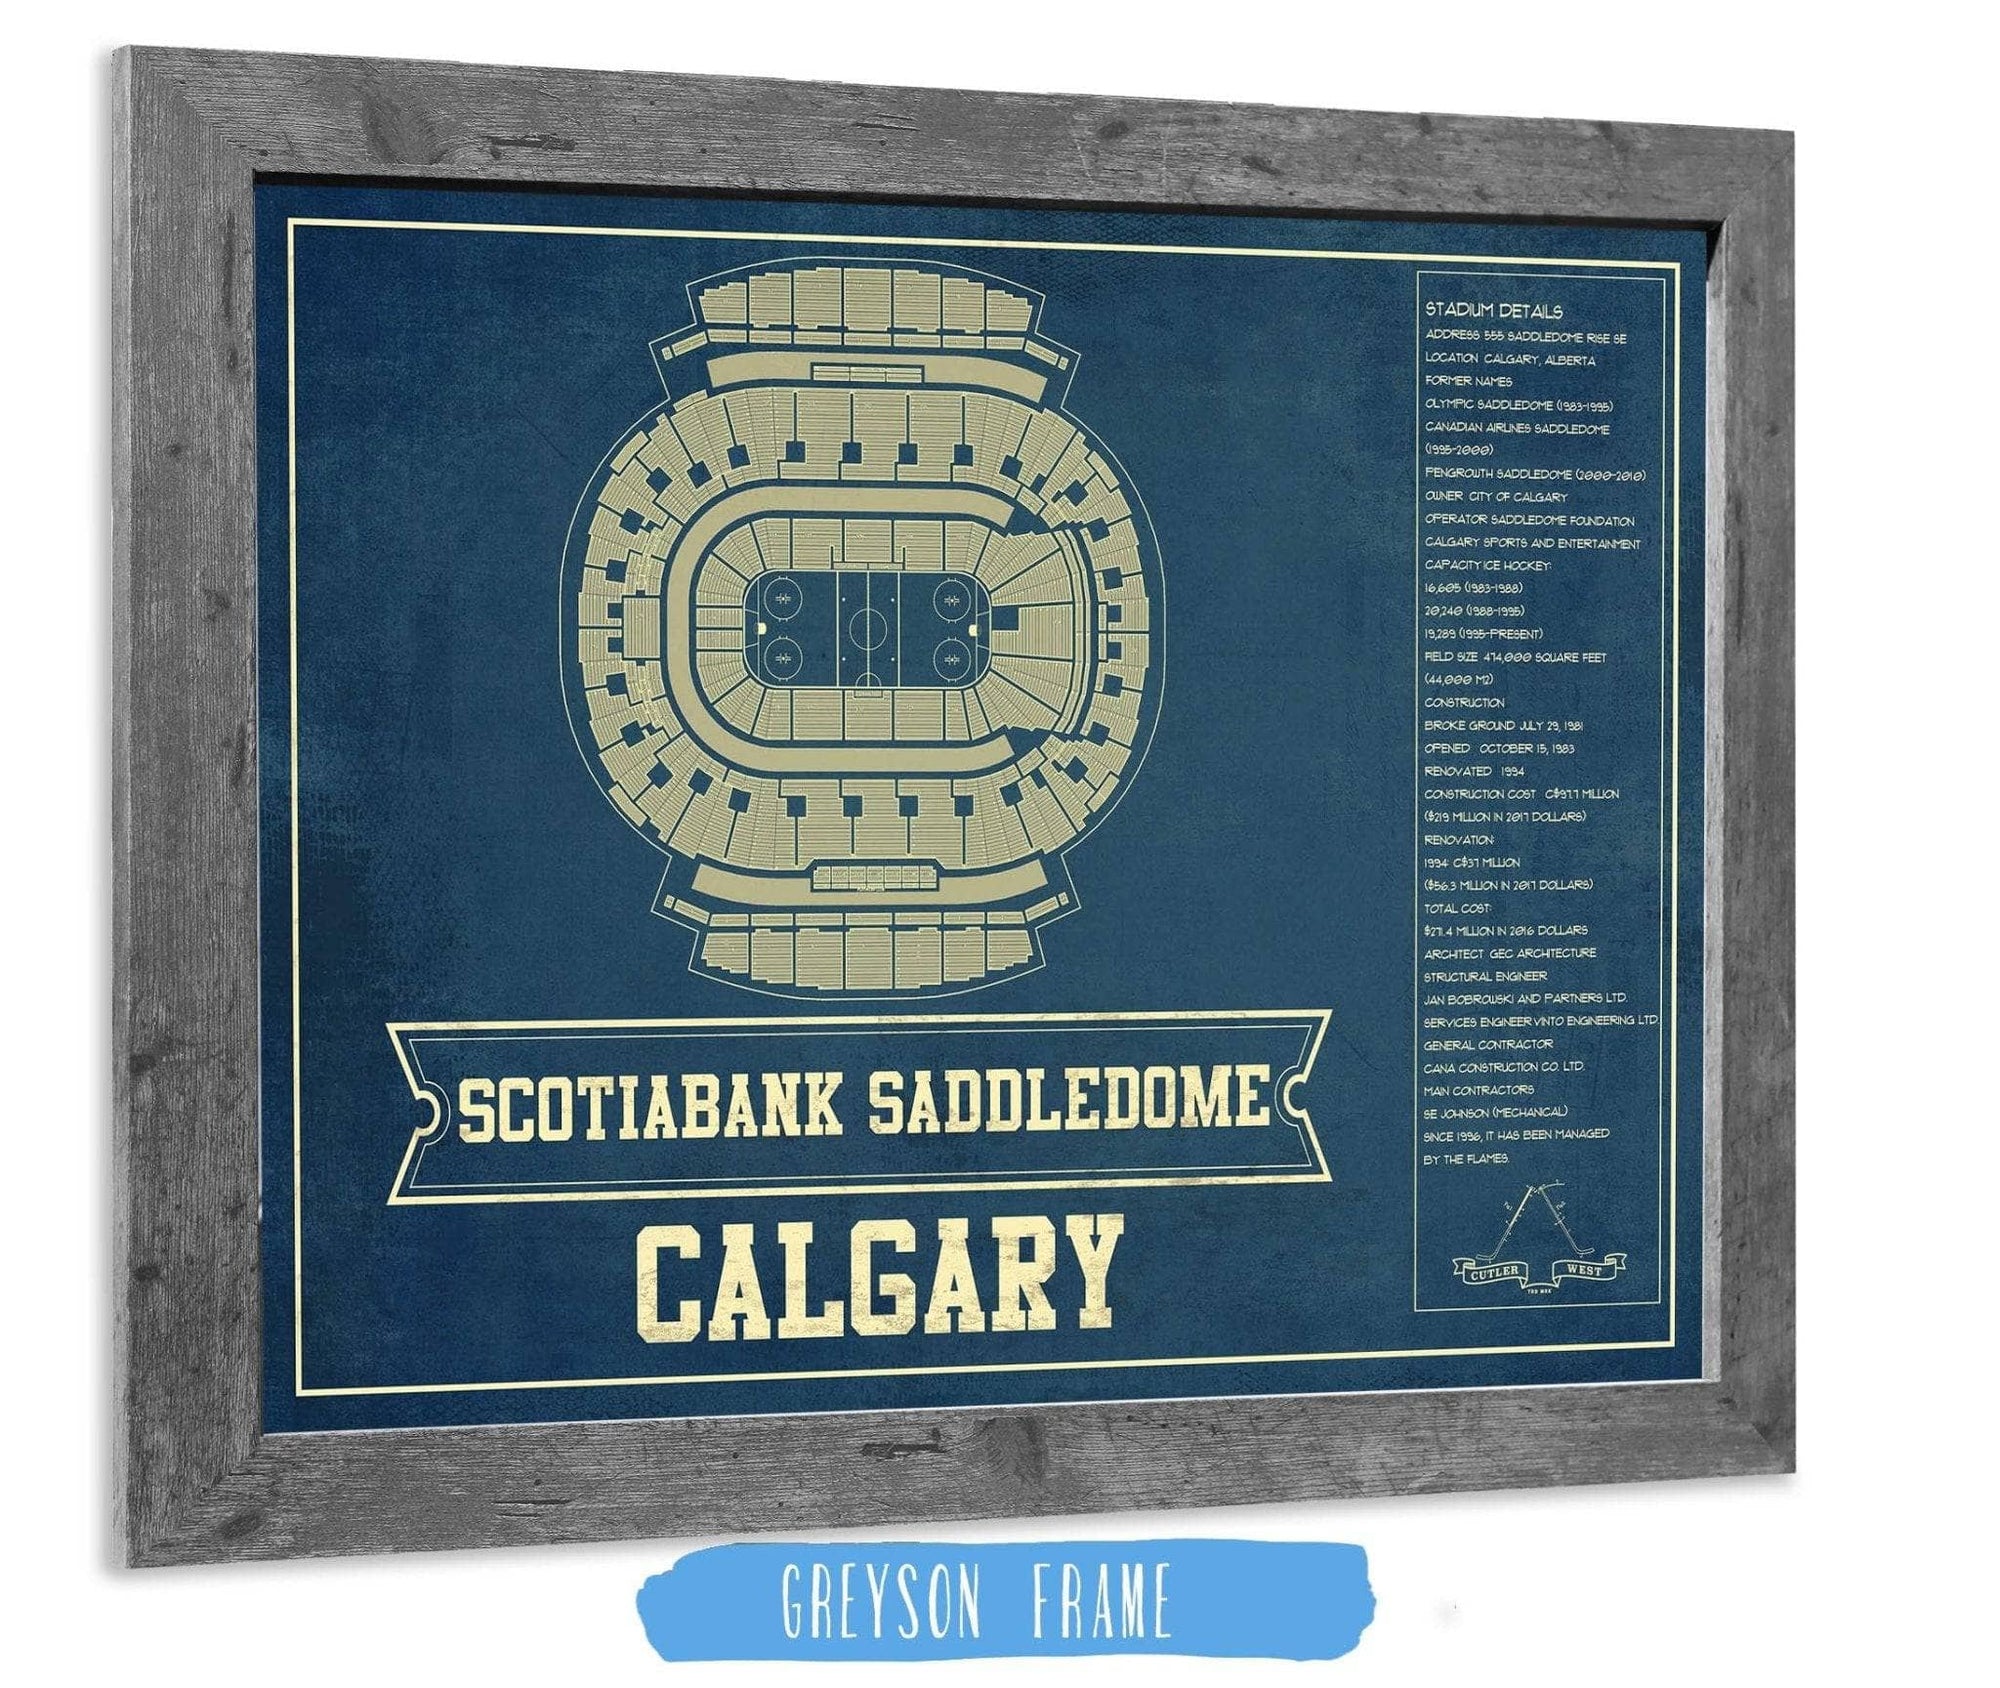 Cutler West 14" x 11" / Greyson Frame Calgary Flames Scotiabank Saddledome Seating Chart - Vintage Hockey Print 673818887_78748